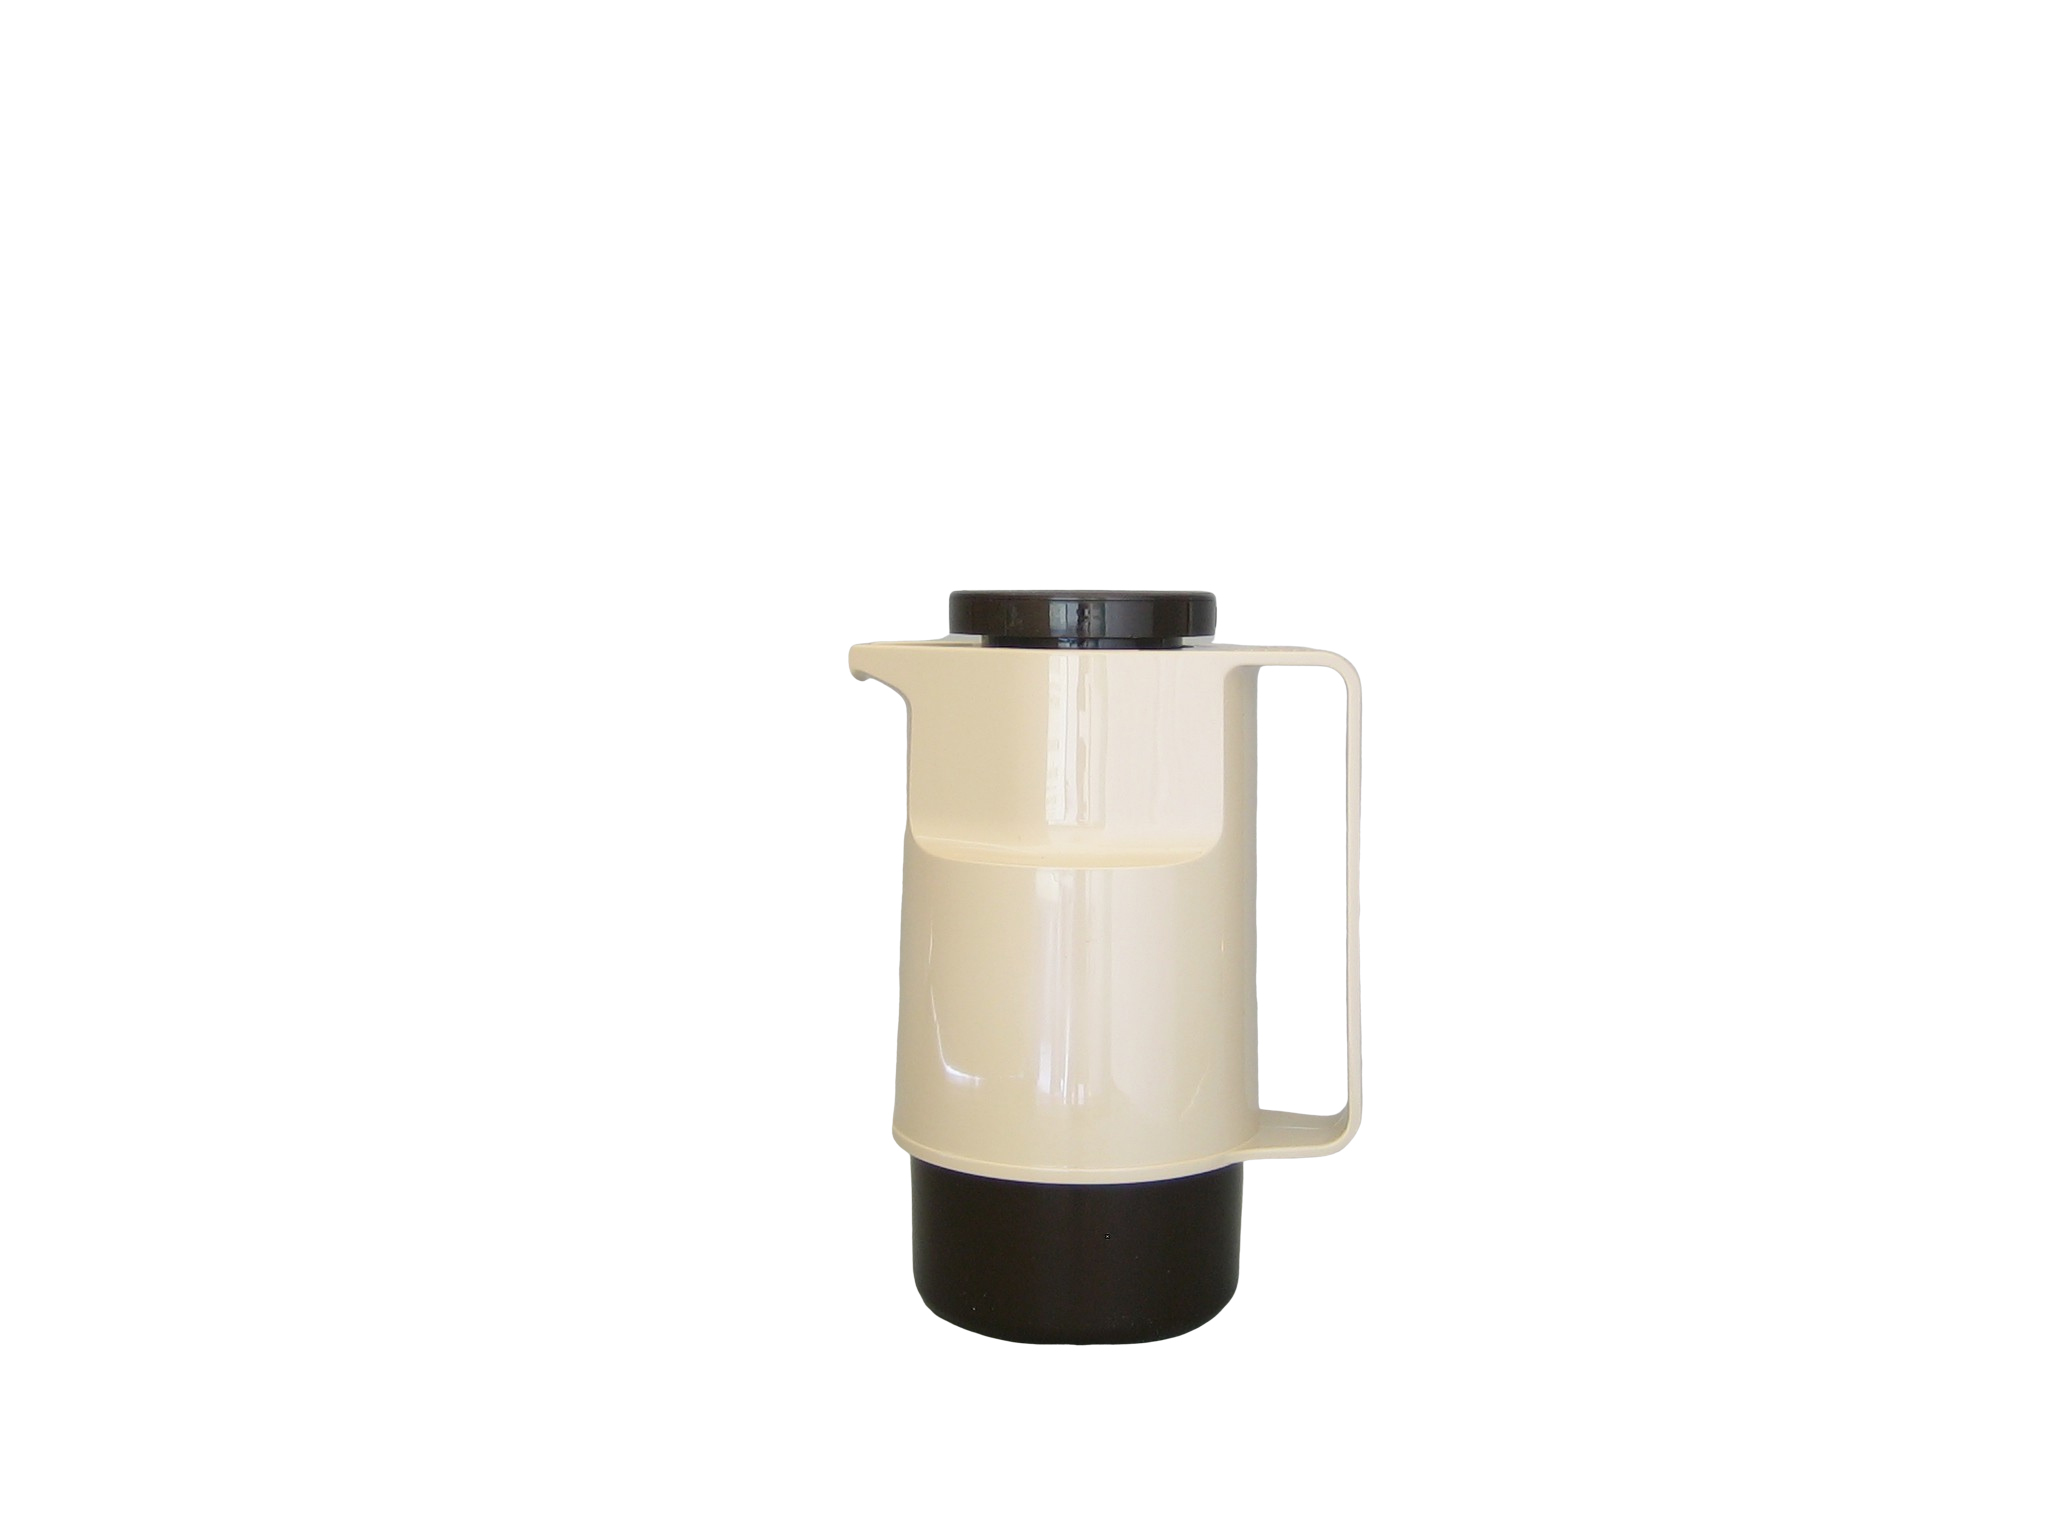 203-1030 - Vacuum carafe ABS beige/brown 0.30 L - Isobel